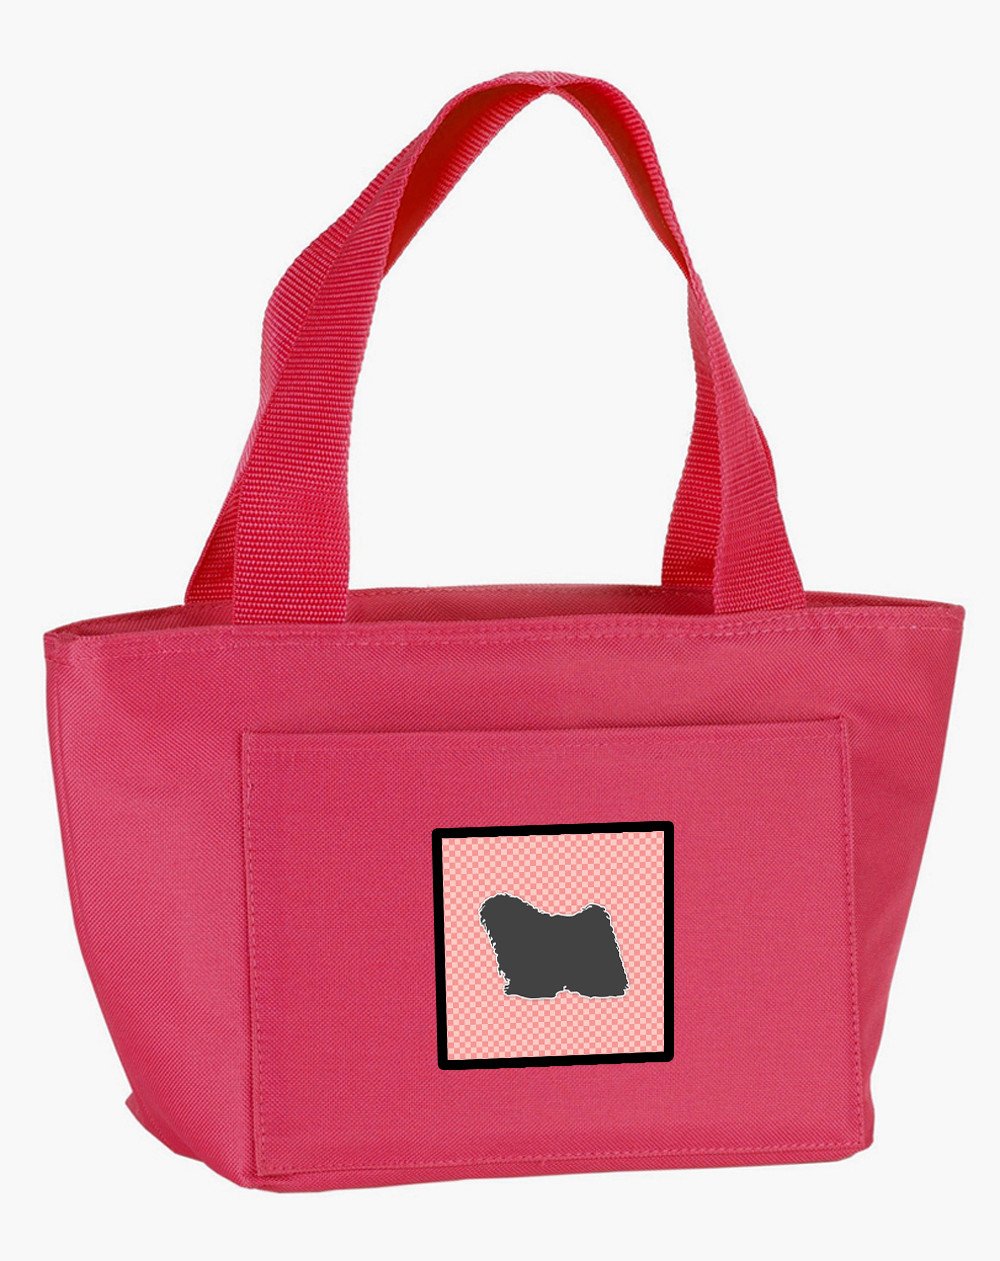 Puli Checkerboard Pink Lunch Bag BB3663PK-8808 by Caroline's Treasures